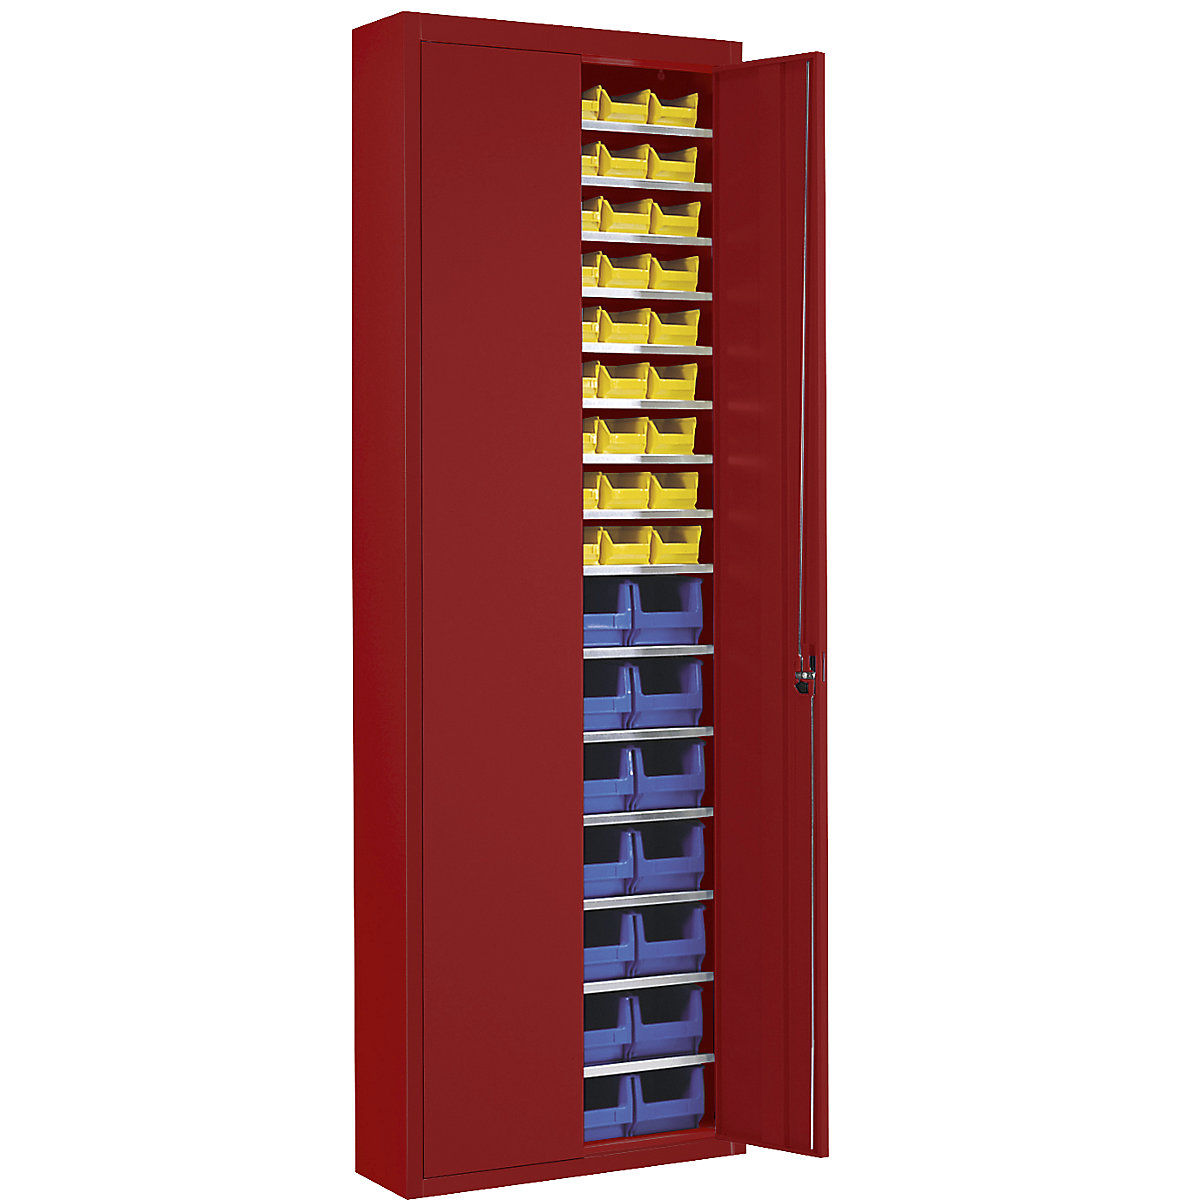 Armadio magazzino con cassette – mauser, alt. x largh. x prof. 2150 x 680 x 280 mm, tinta unita, rosso, 82 cassettine-6